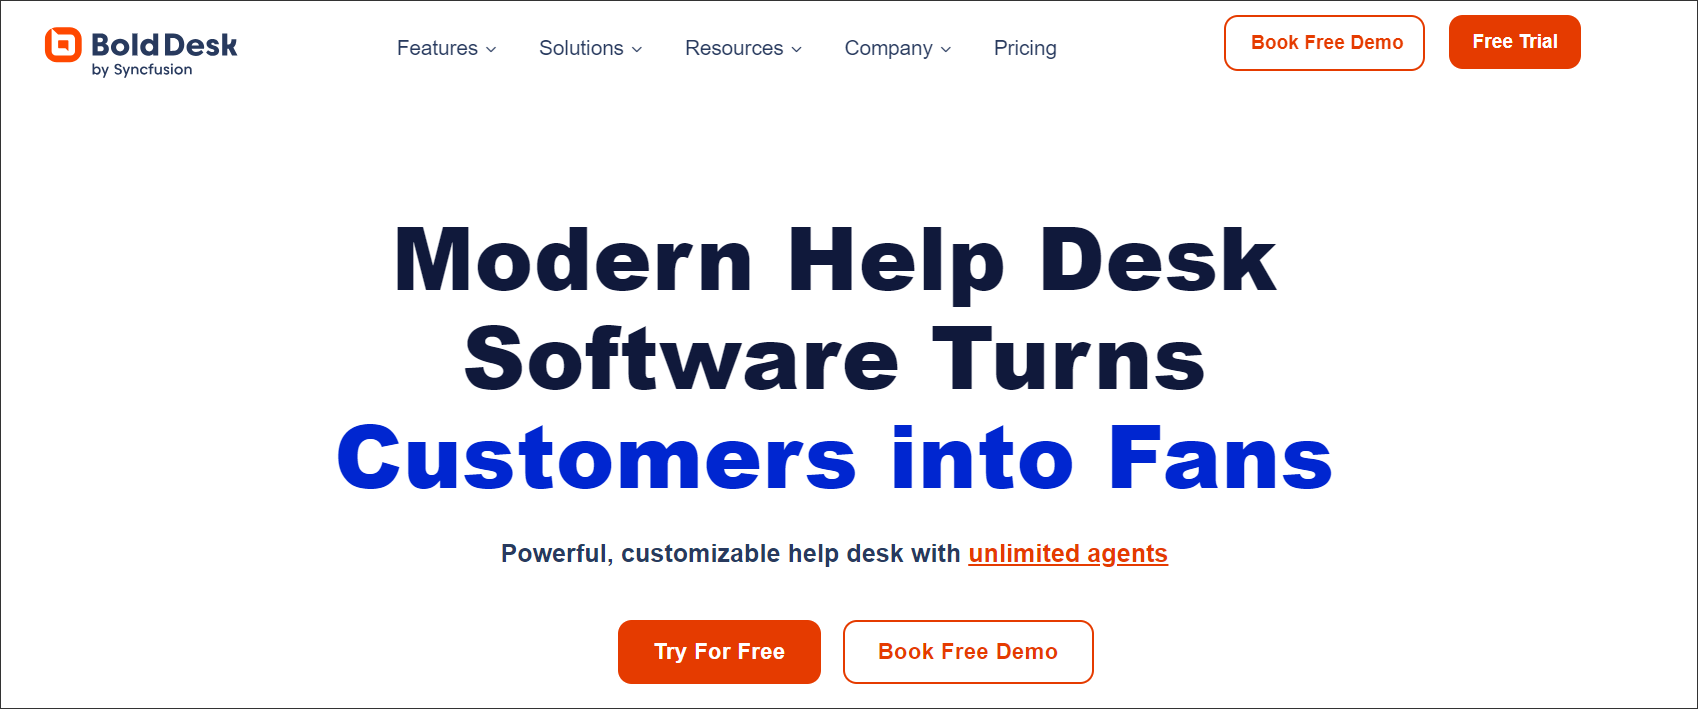 bolddesk - customer service software